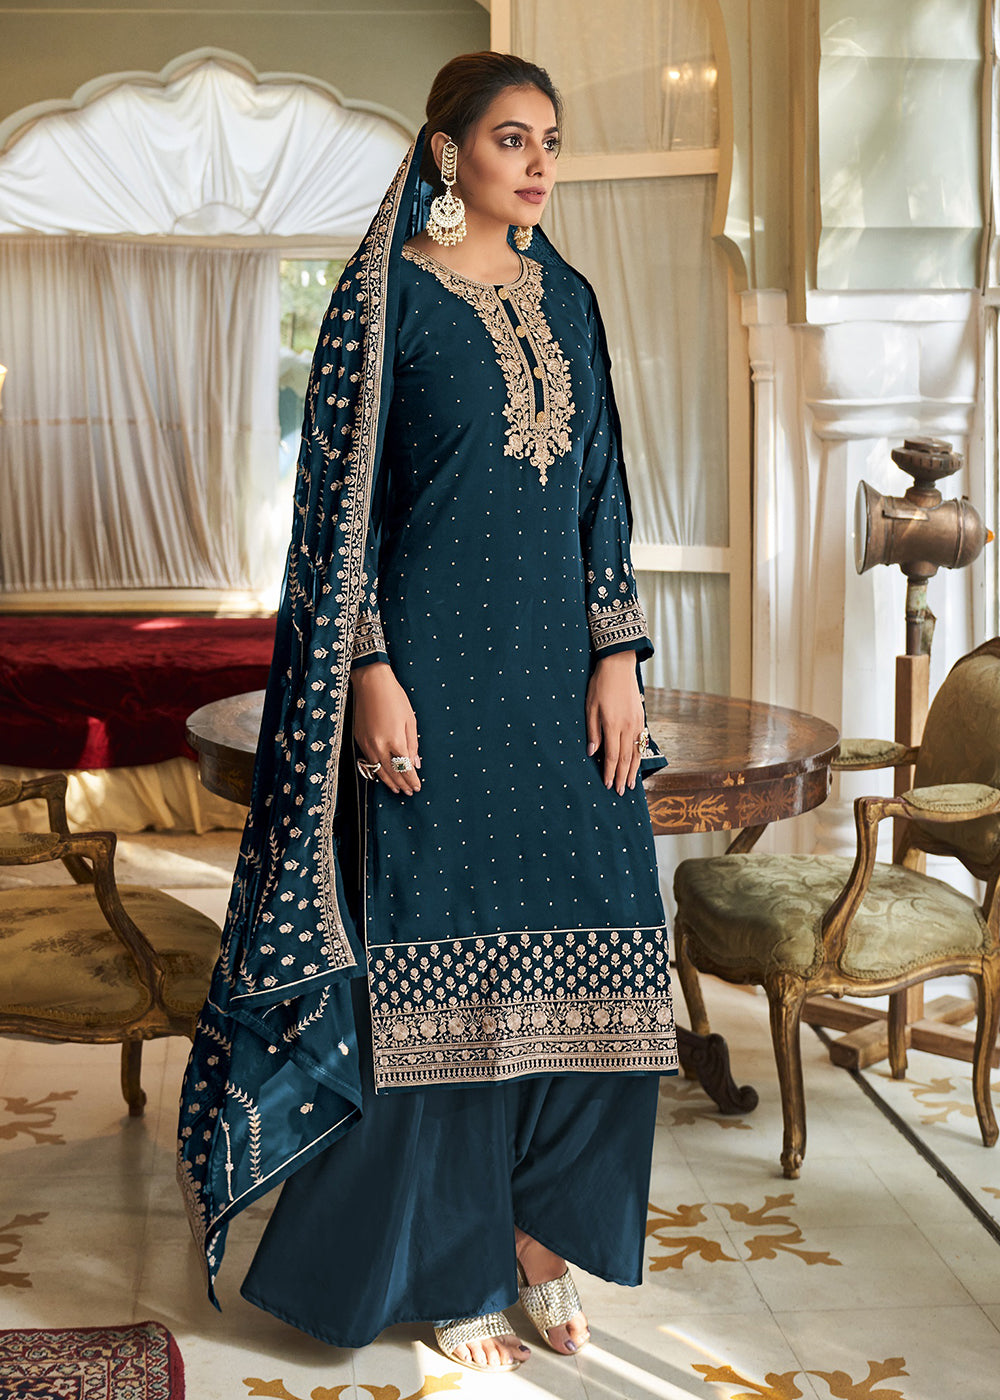 Buy Now Fancy Teal Blue Diamond Swarovski Work Palazzo Salwar Suit Online in USA, UK, Canada & Worldwide at Empress Clothing.